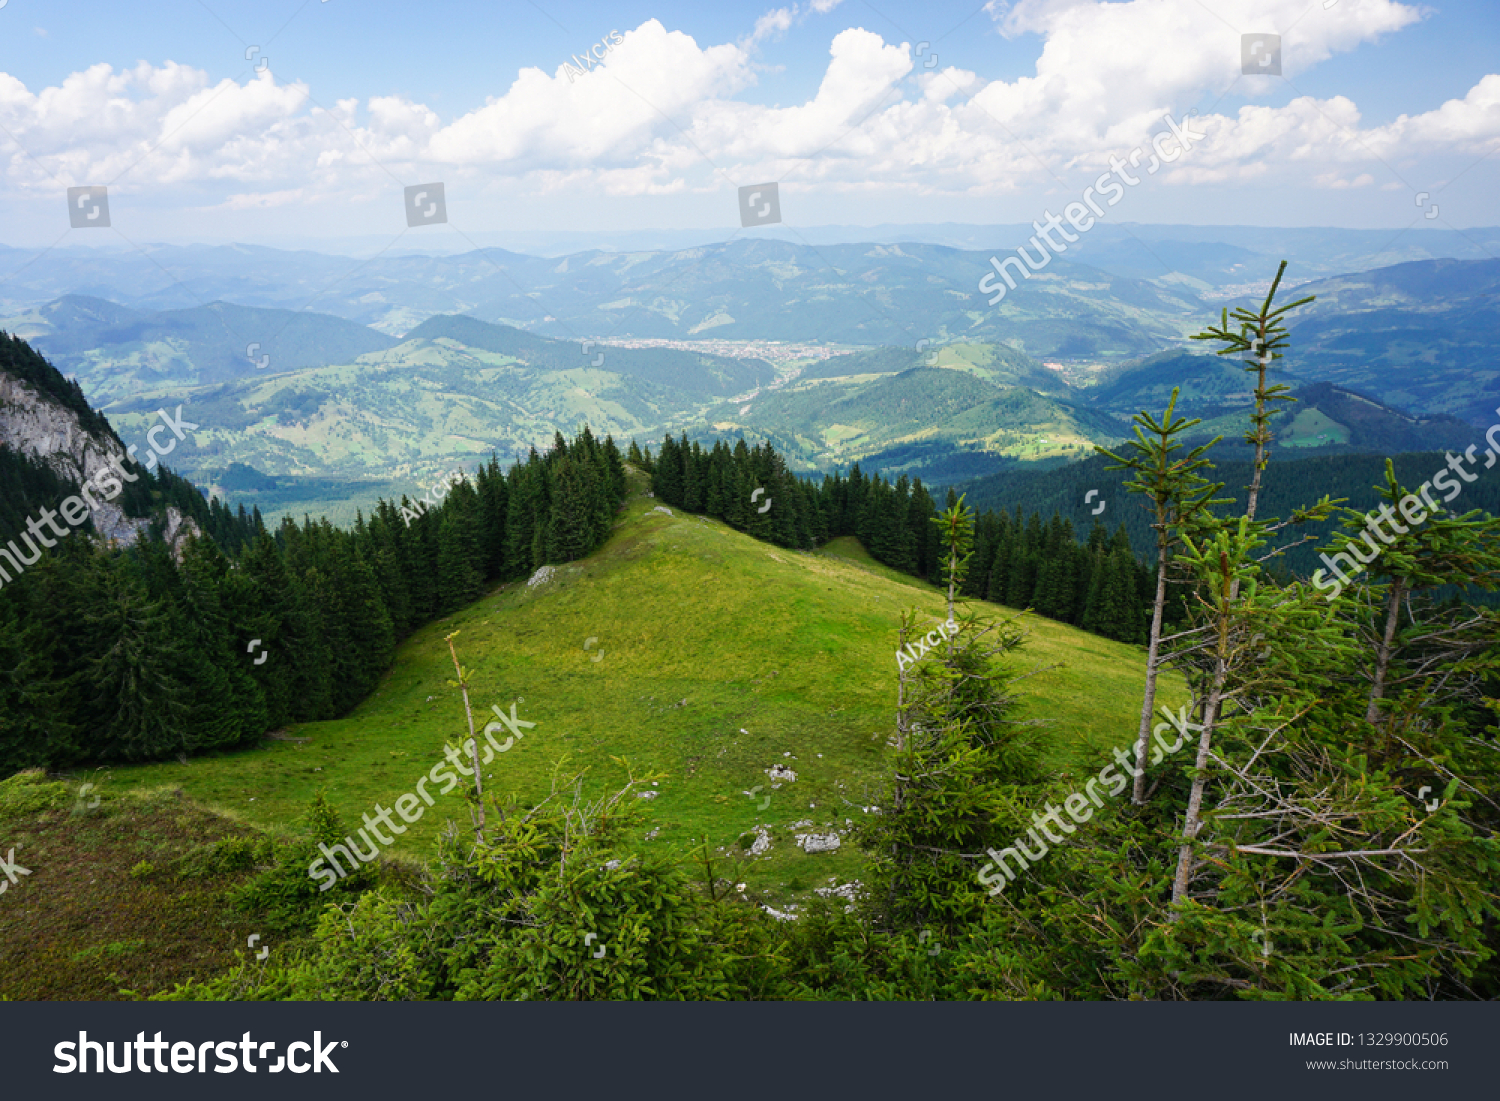 Green mountains in Romania - Rarau Mountains - Campulung Moldovenesc depression valley on a sunny day of summer  #1329900506